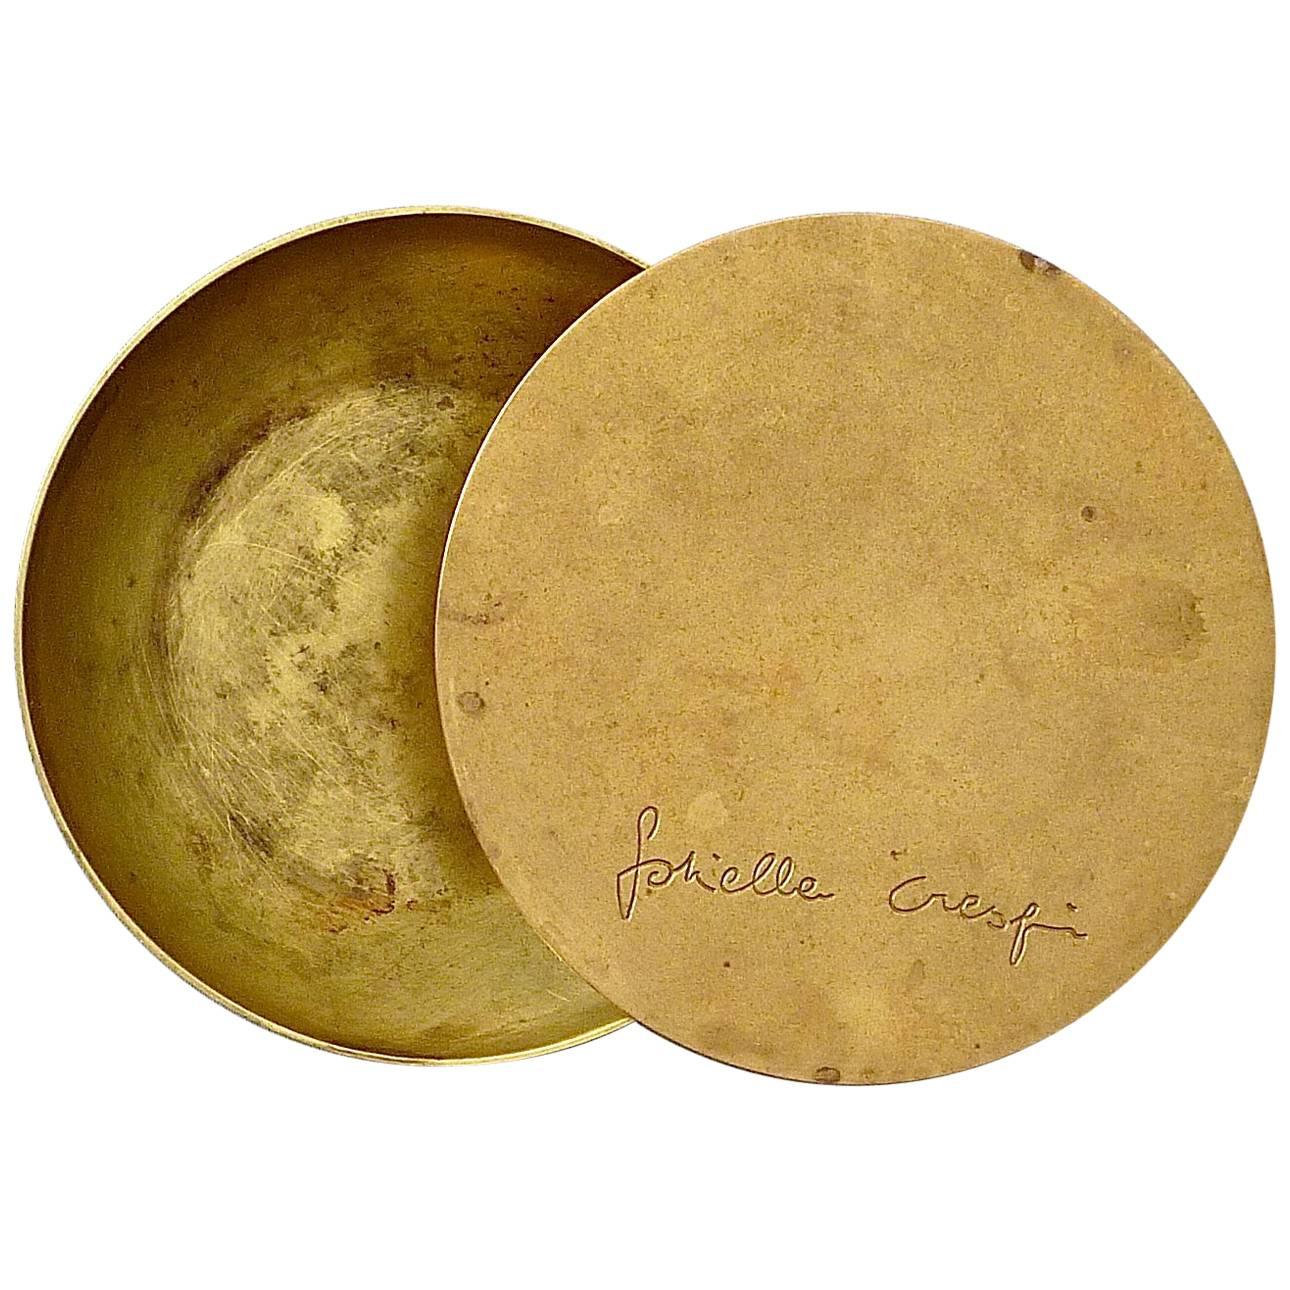 Signed Rare Gabriella Crespi "Antivento" Ashtray Patinated Brass Bowl, 1970